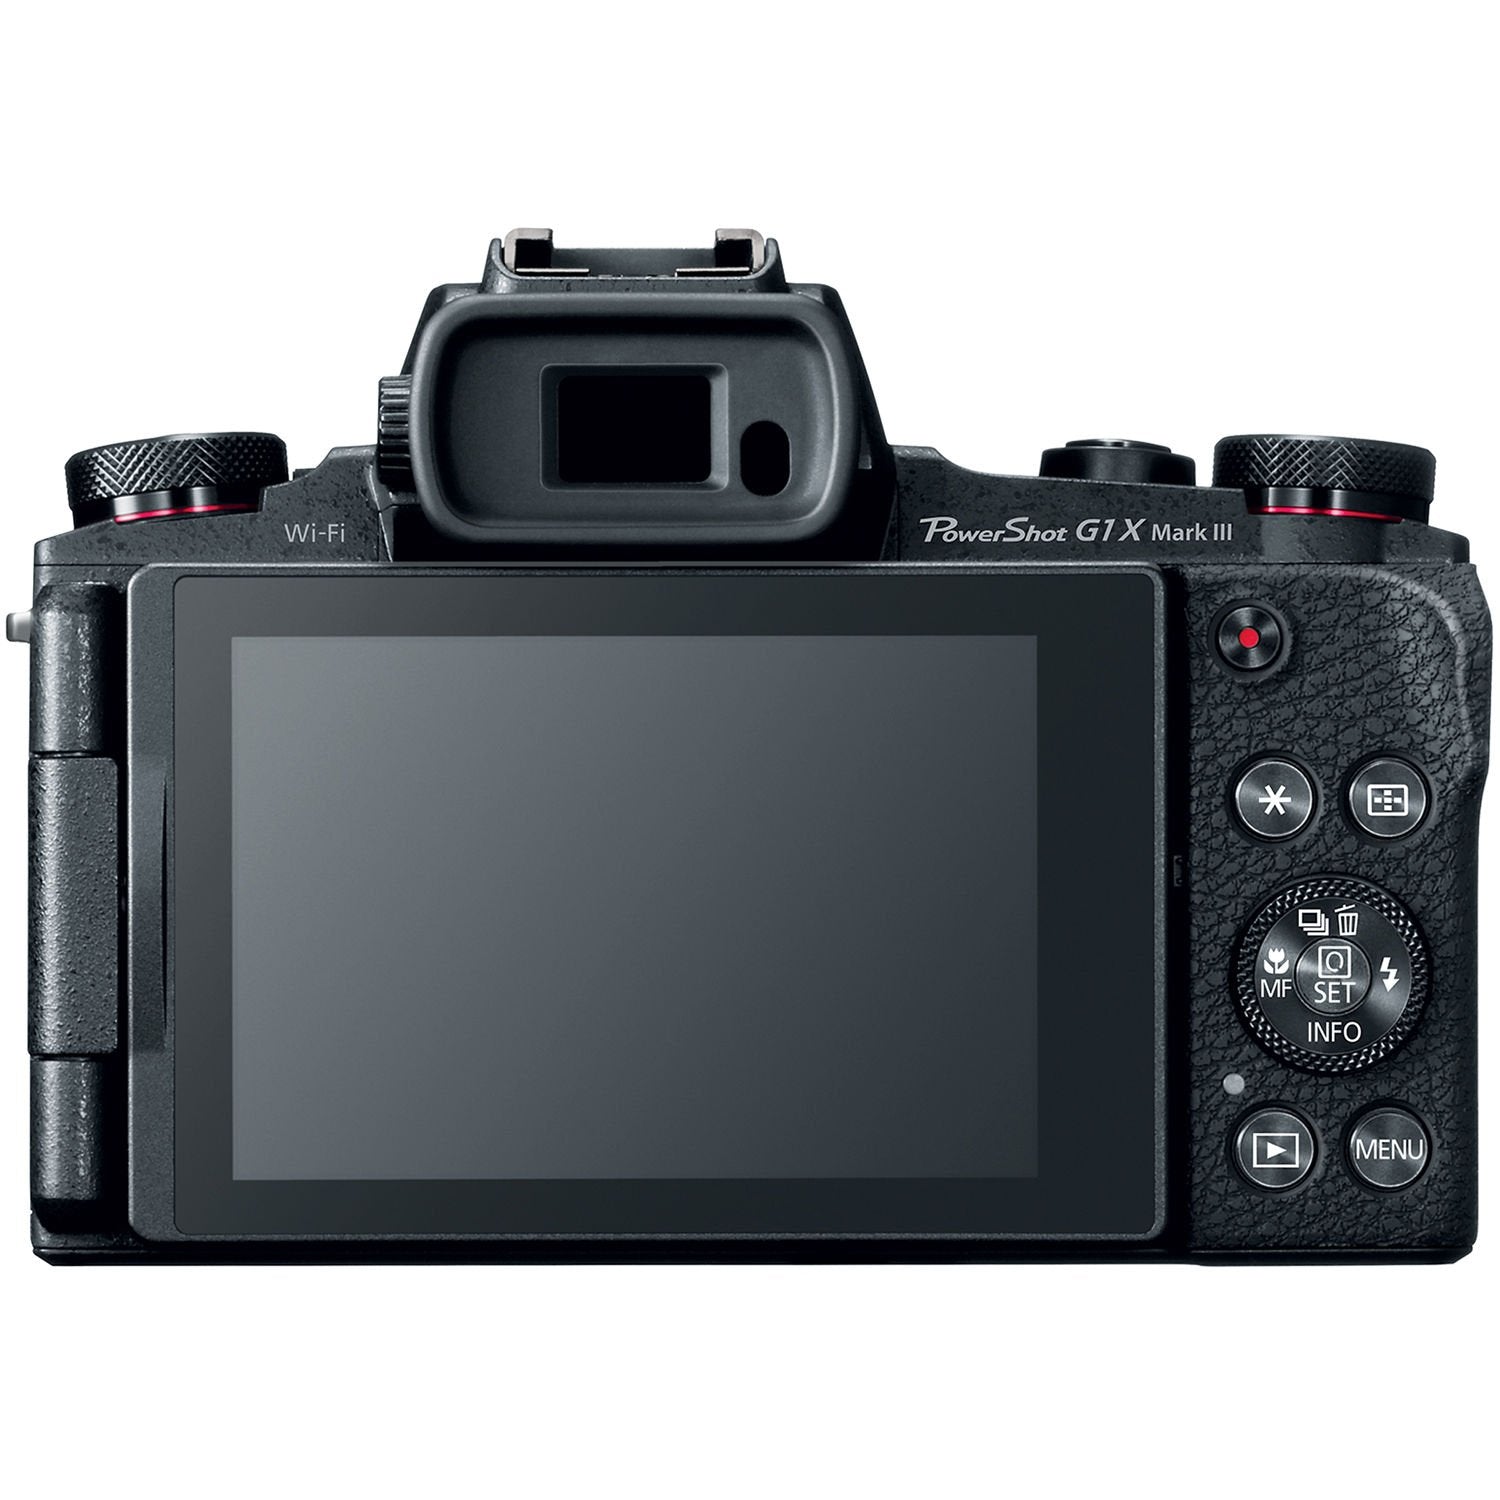 Canon PowerShot G1 X Mark III Digital Camera #2208C001 International Version (No Warranty) Base Bundle